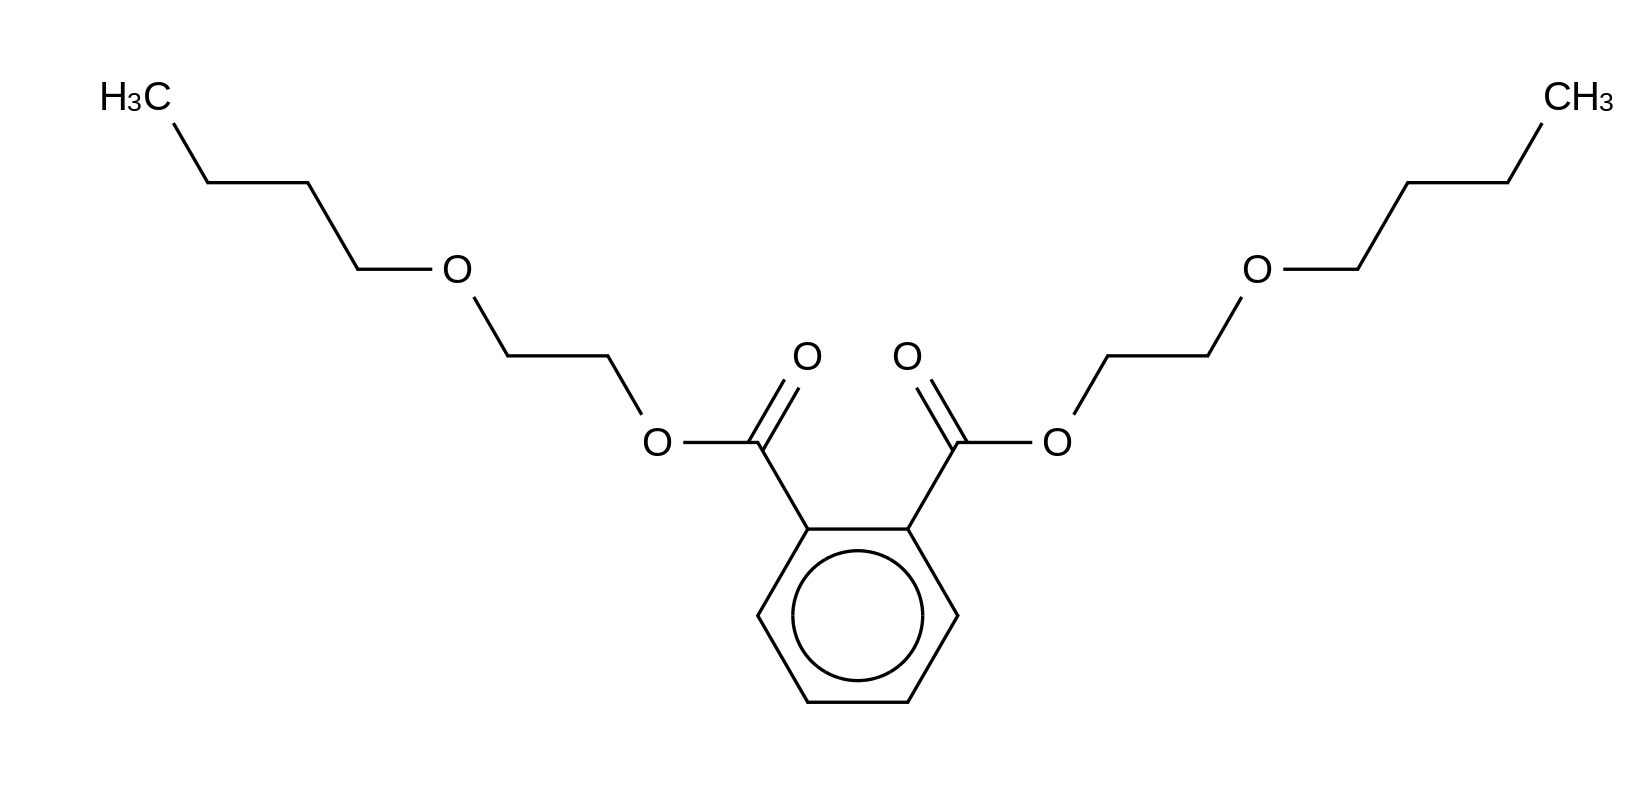 Bis(2-butoxyethyl) Phthalate